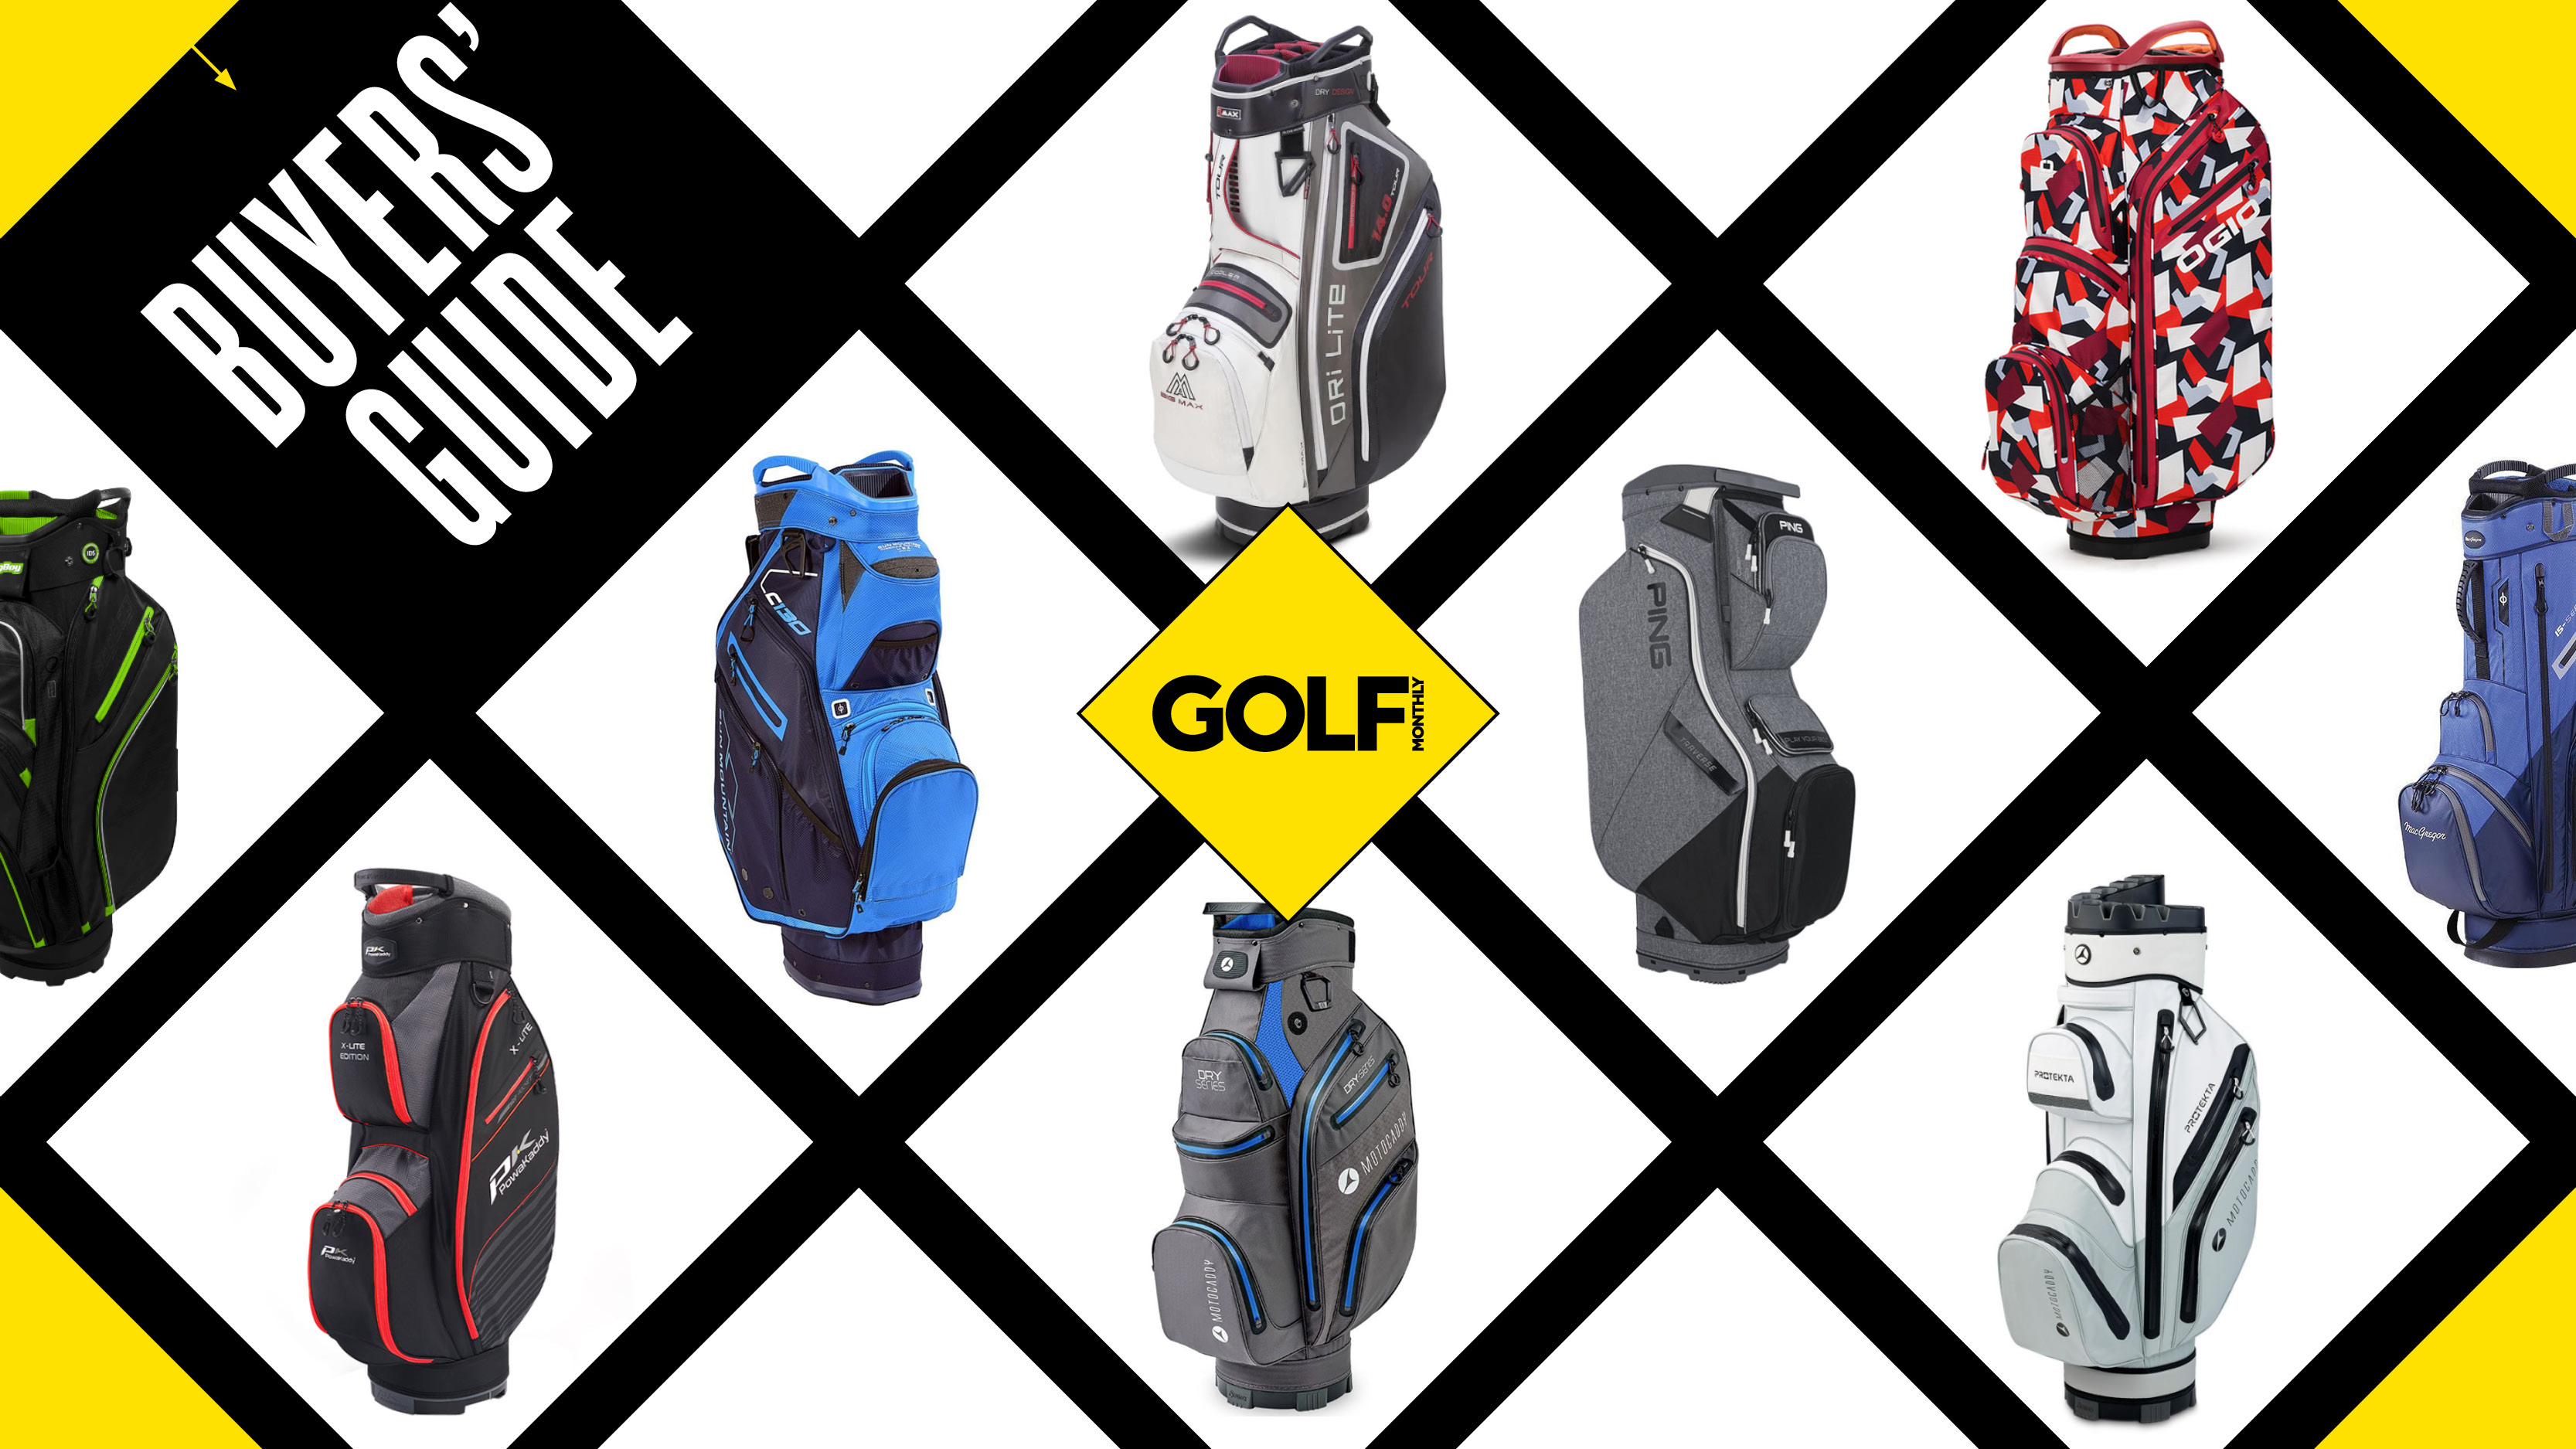 Cobra Ladies Ultralight Golf Cart Bag - Affordable Golf